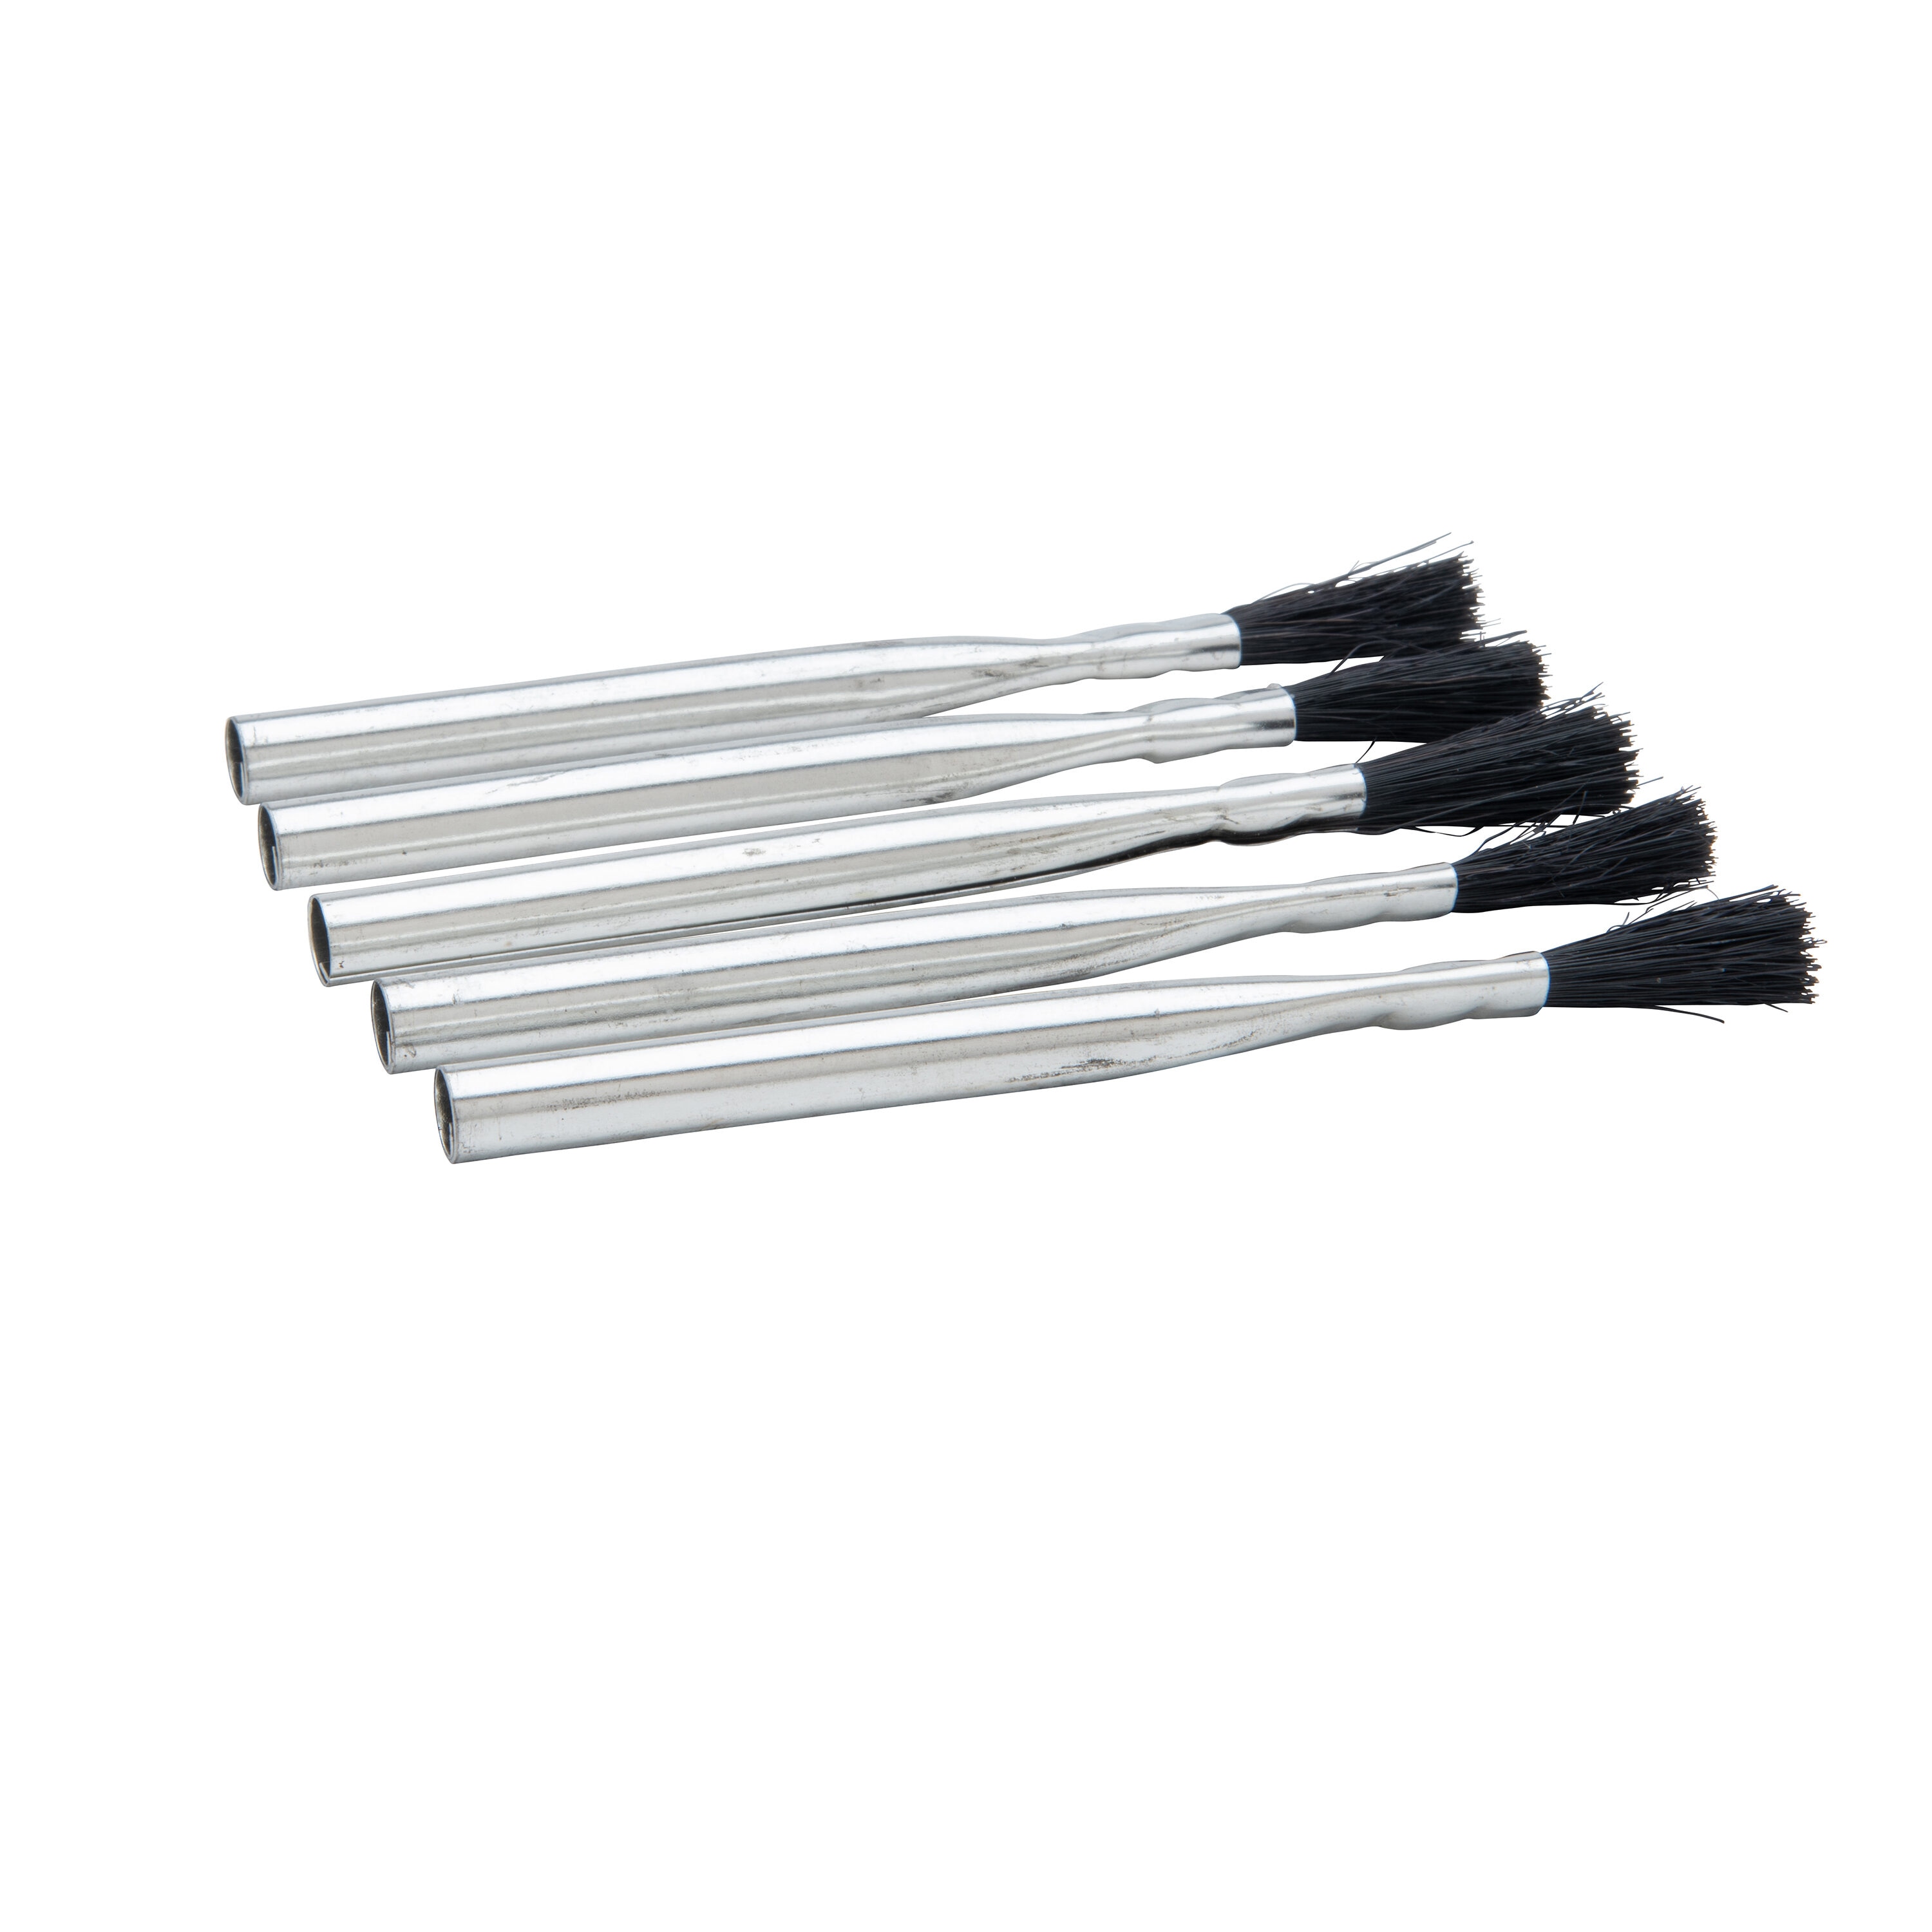 Buy Tin Handle Flux/Acid Brush 3/8 x 3/4 x 5-3/4 Online at $0.65 - JL  Smith & Co